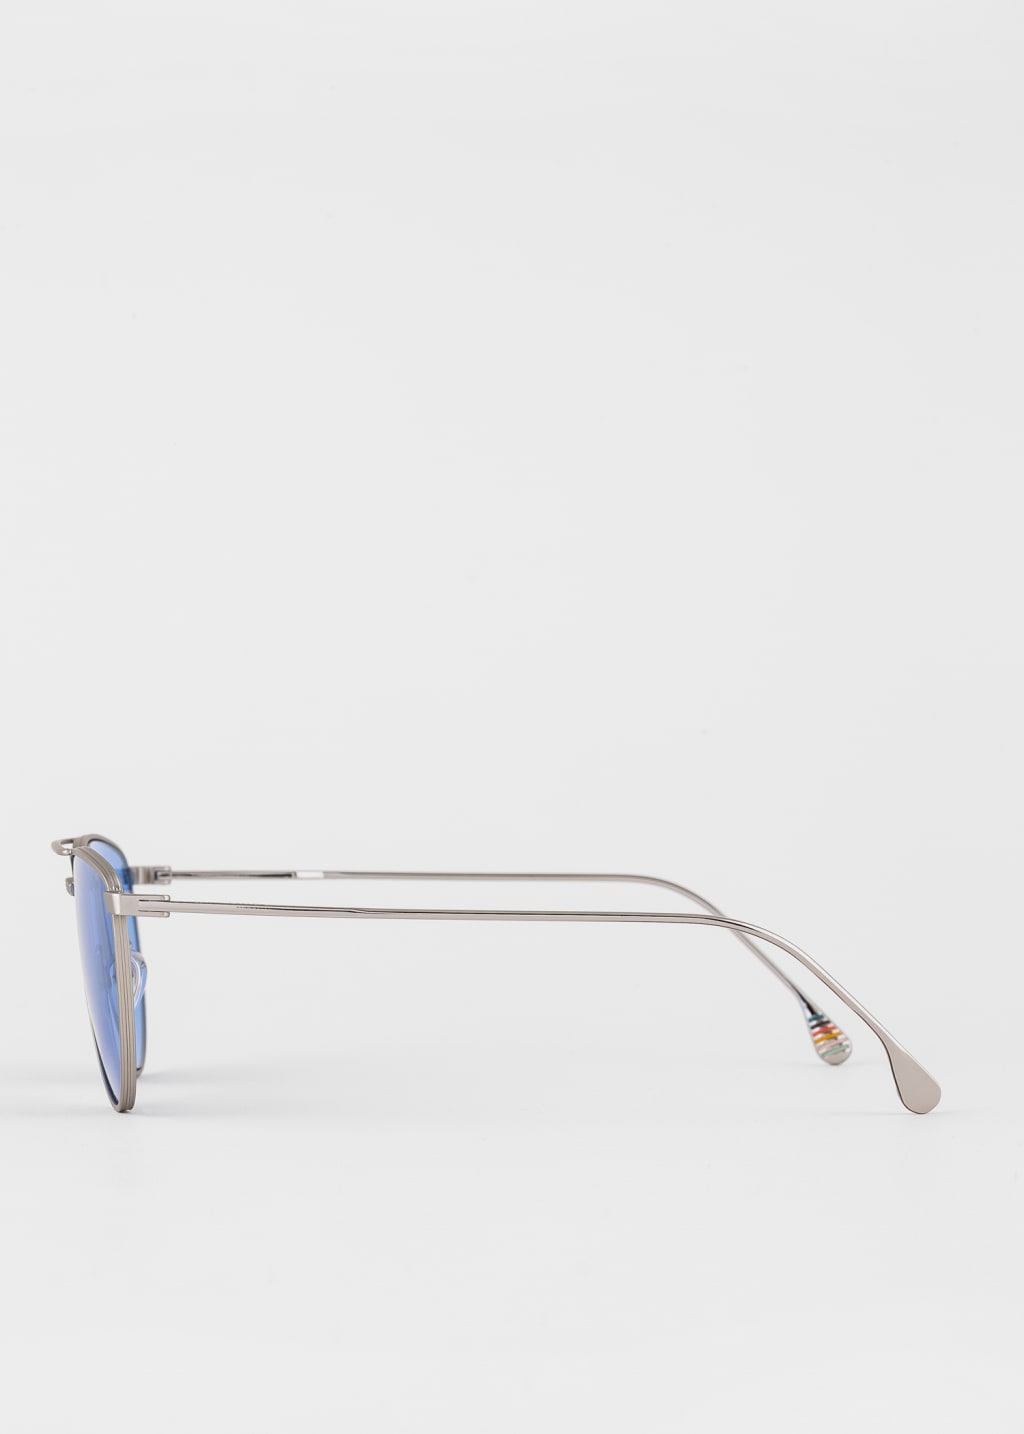 Product view - Matte Silver 'Garner' Sunglasses